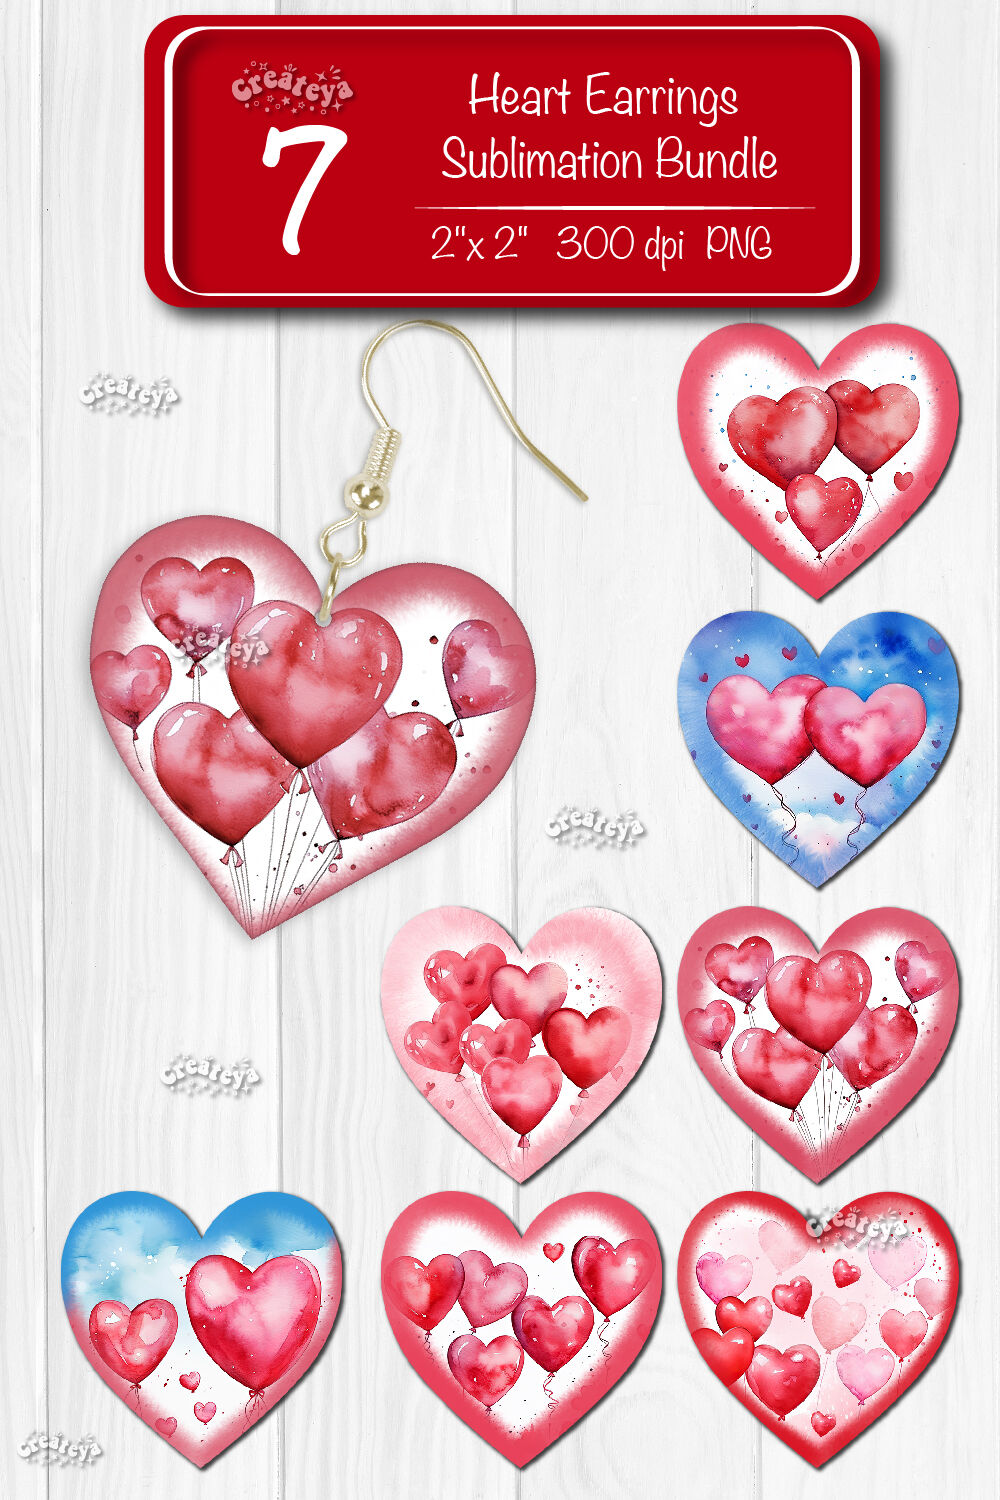 Valentines Day earrings, Heart earring, Earring sublimation